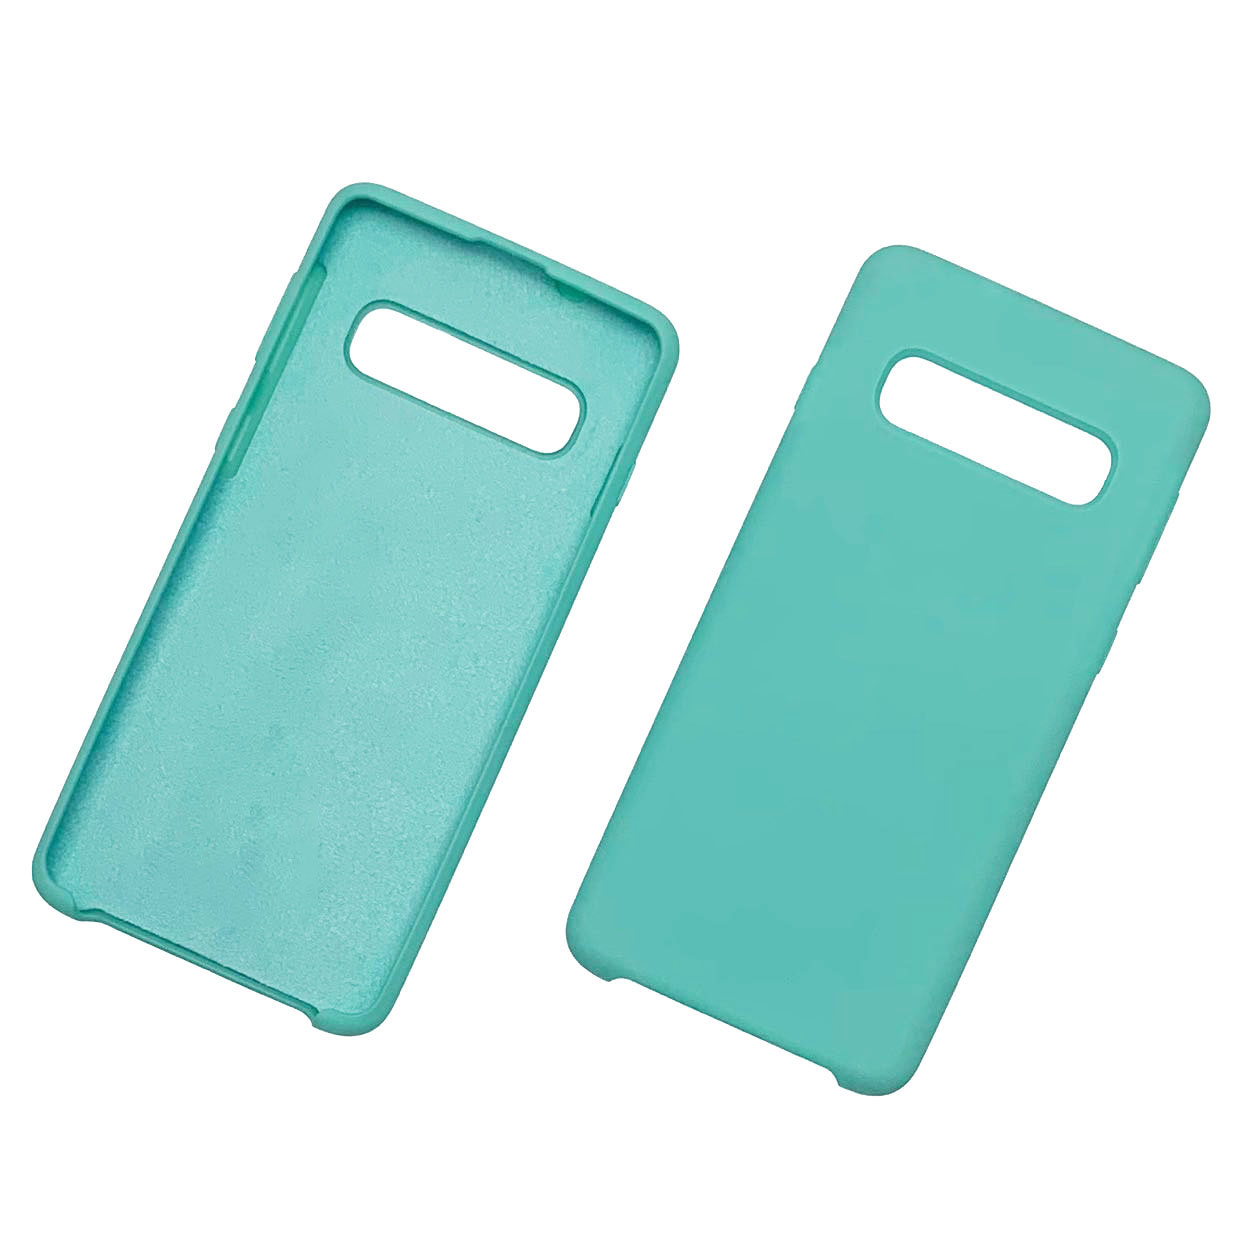 Чехол накладка Silicon Cover для SAMSUNG Galaxy S10 Plus (SM-G975), силикон, бархат, цвет бирюзовый.